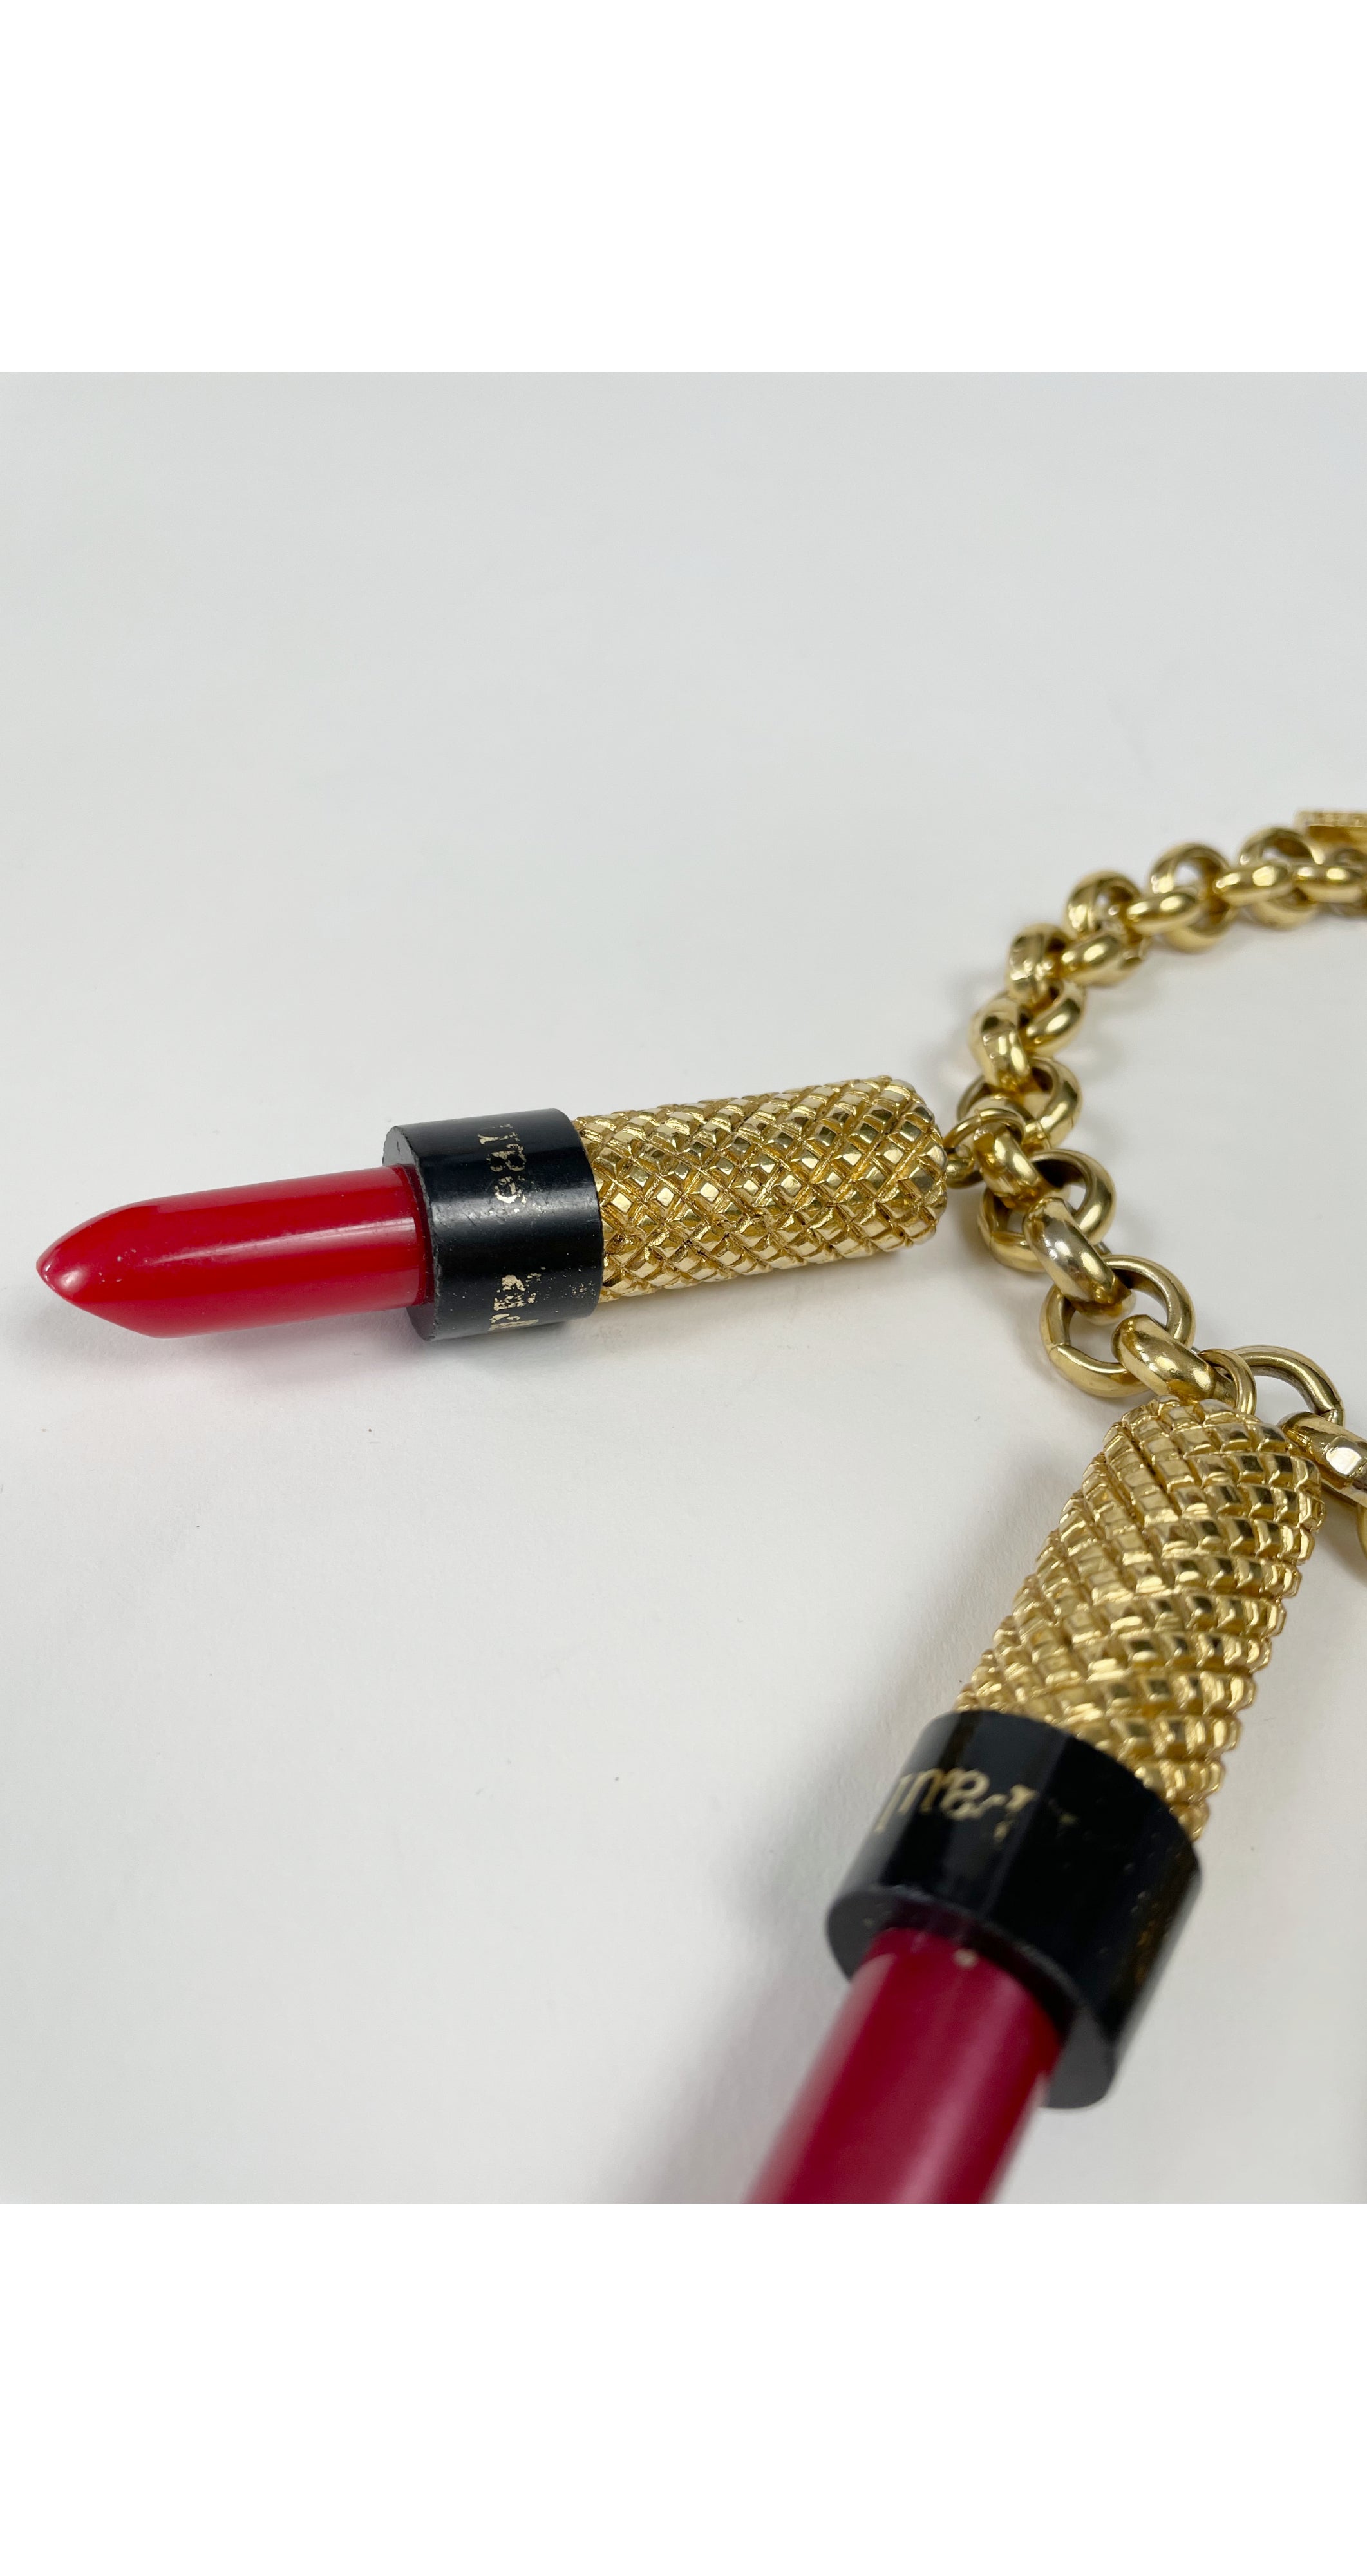 Jean-Paul Gaultier 1980s Lipstick Charm Gold-Tone Necklace